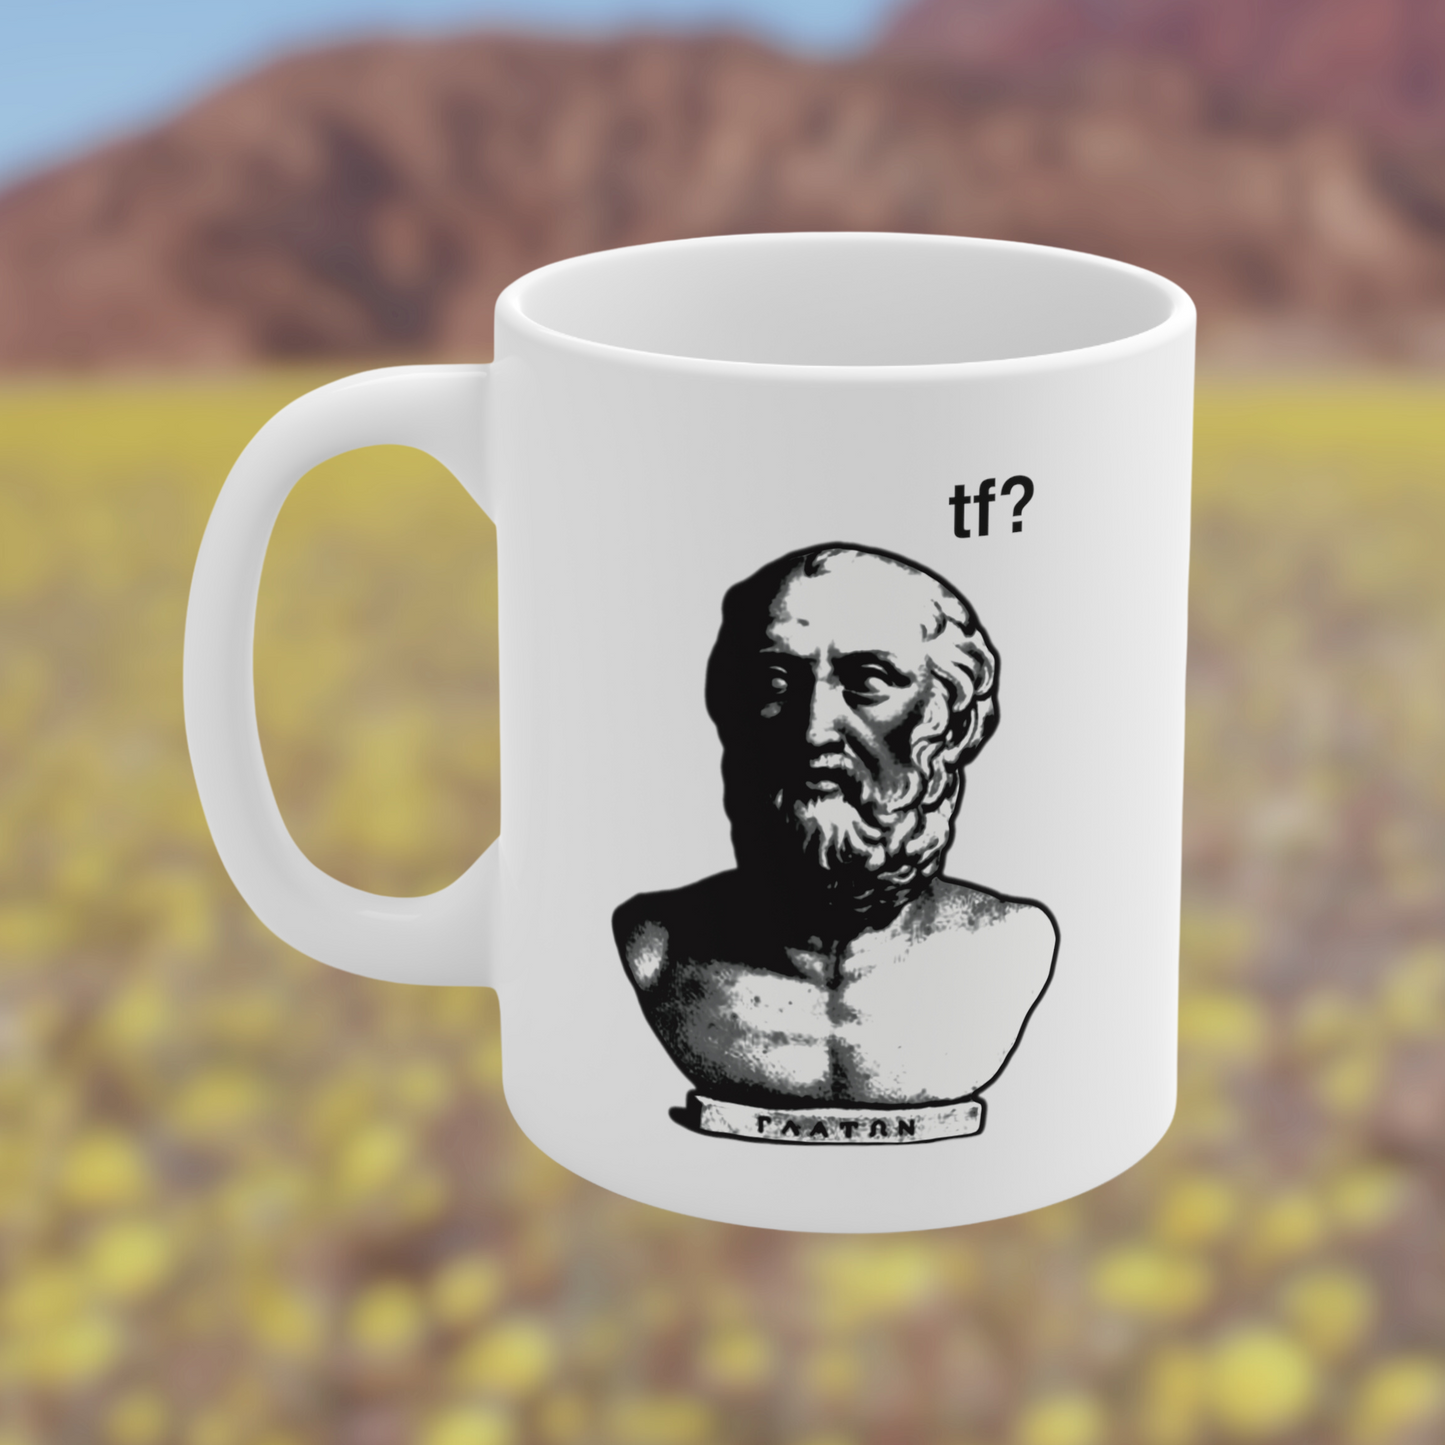 Plato tf? Mug